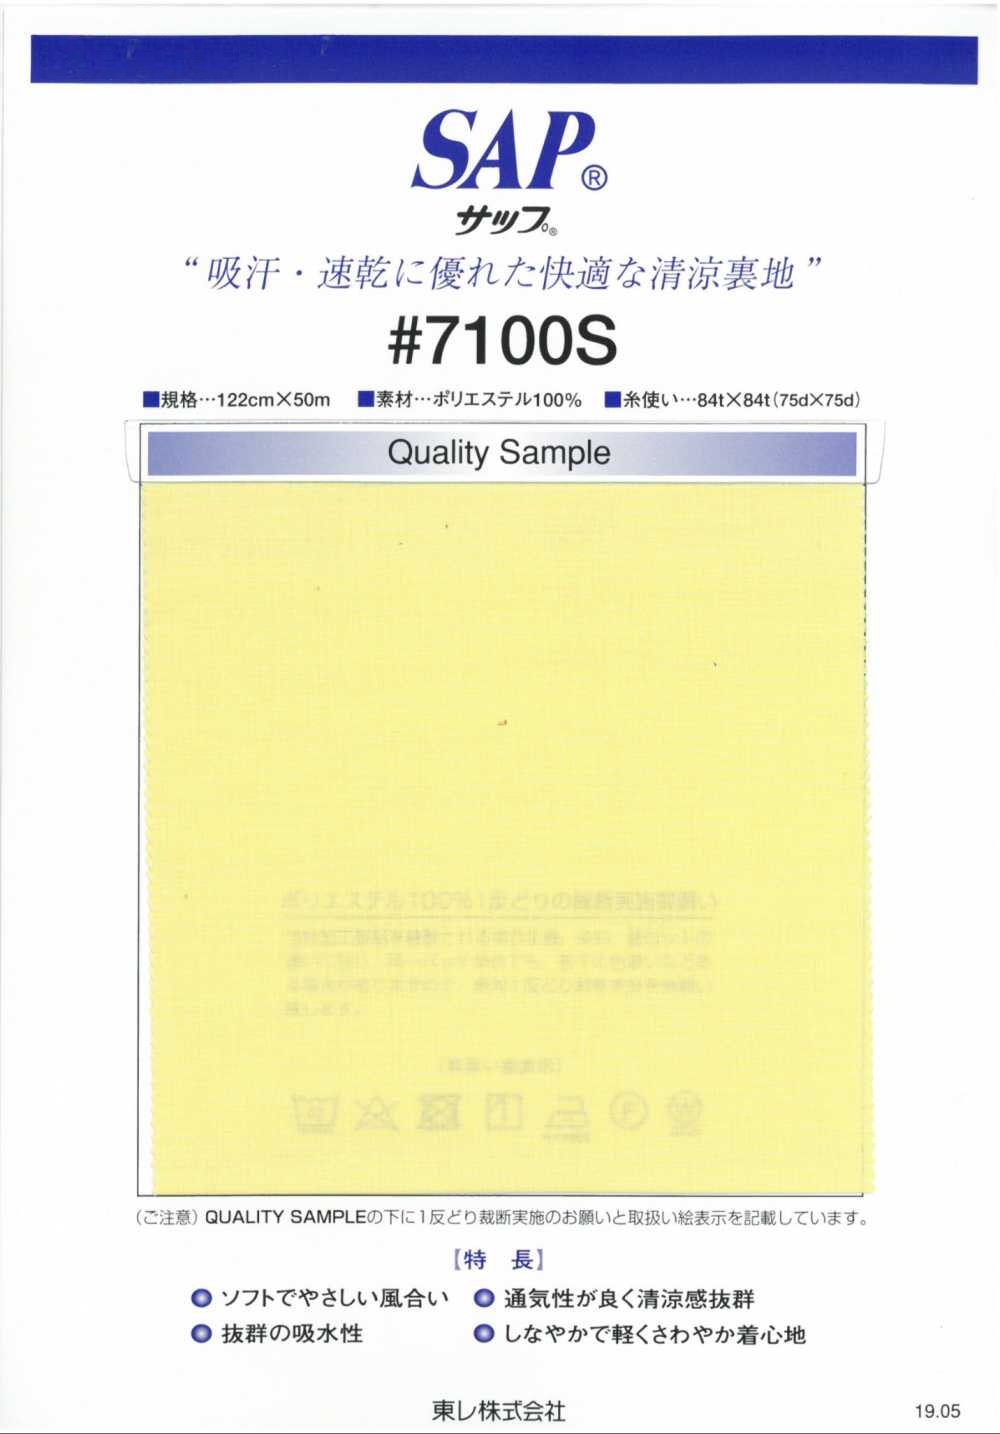 7100S Fodera Rinfrescante SAP (Assorbimento Del Sudore, Asciugatura Rapida)[Liner] TORAY